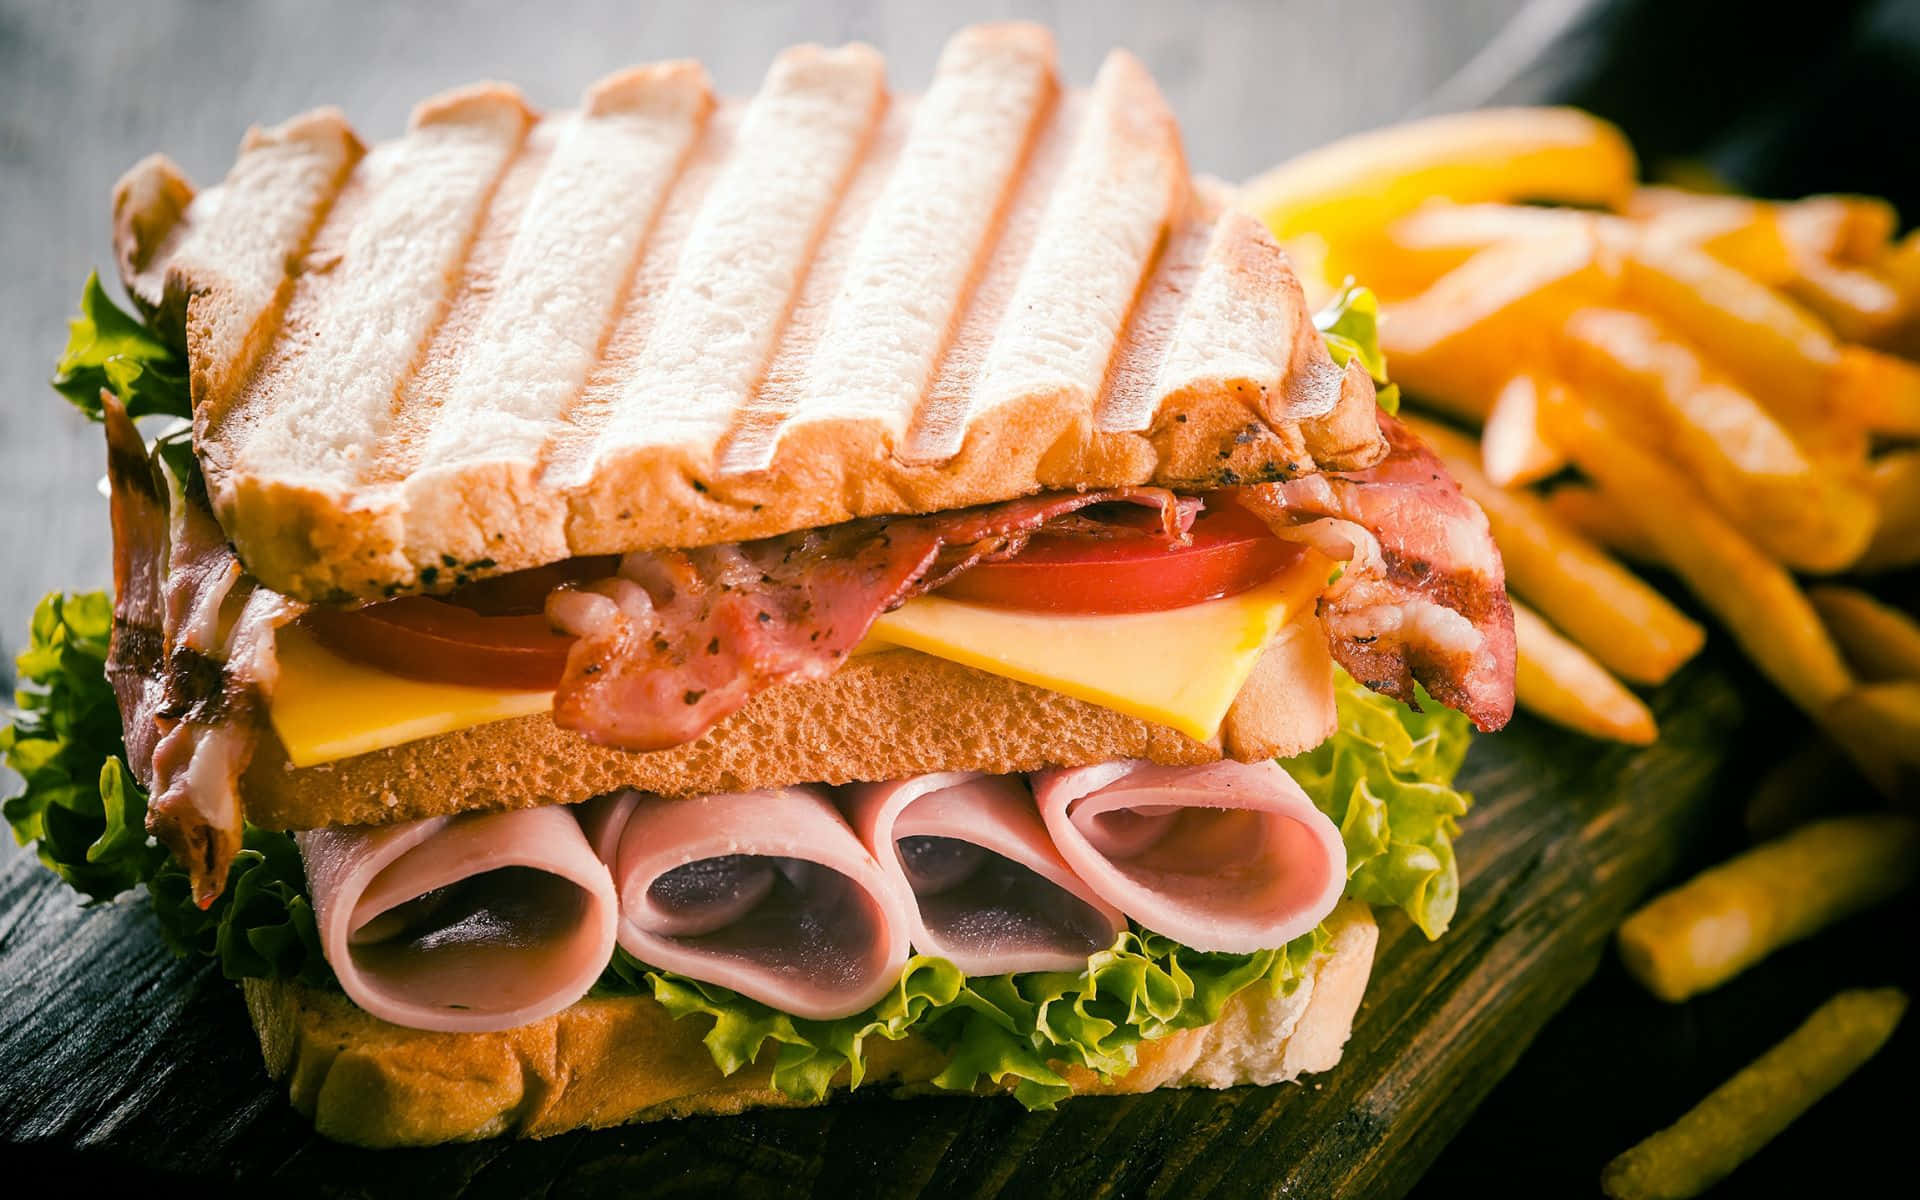 Delicious Gourmet Sandwich on a Cutting Board